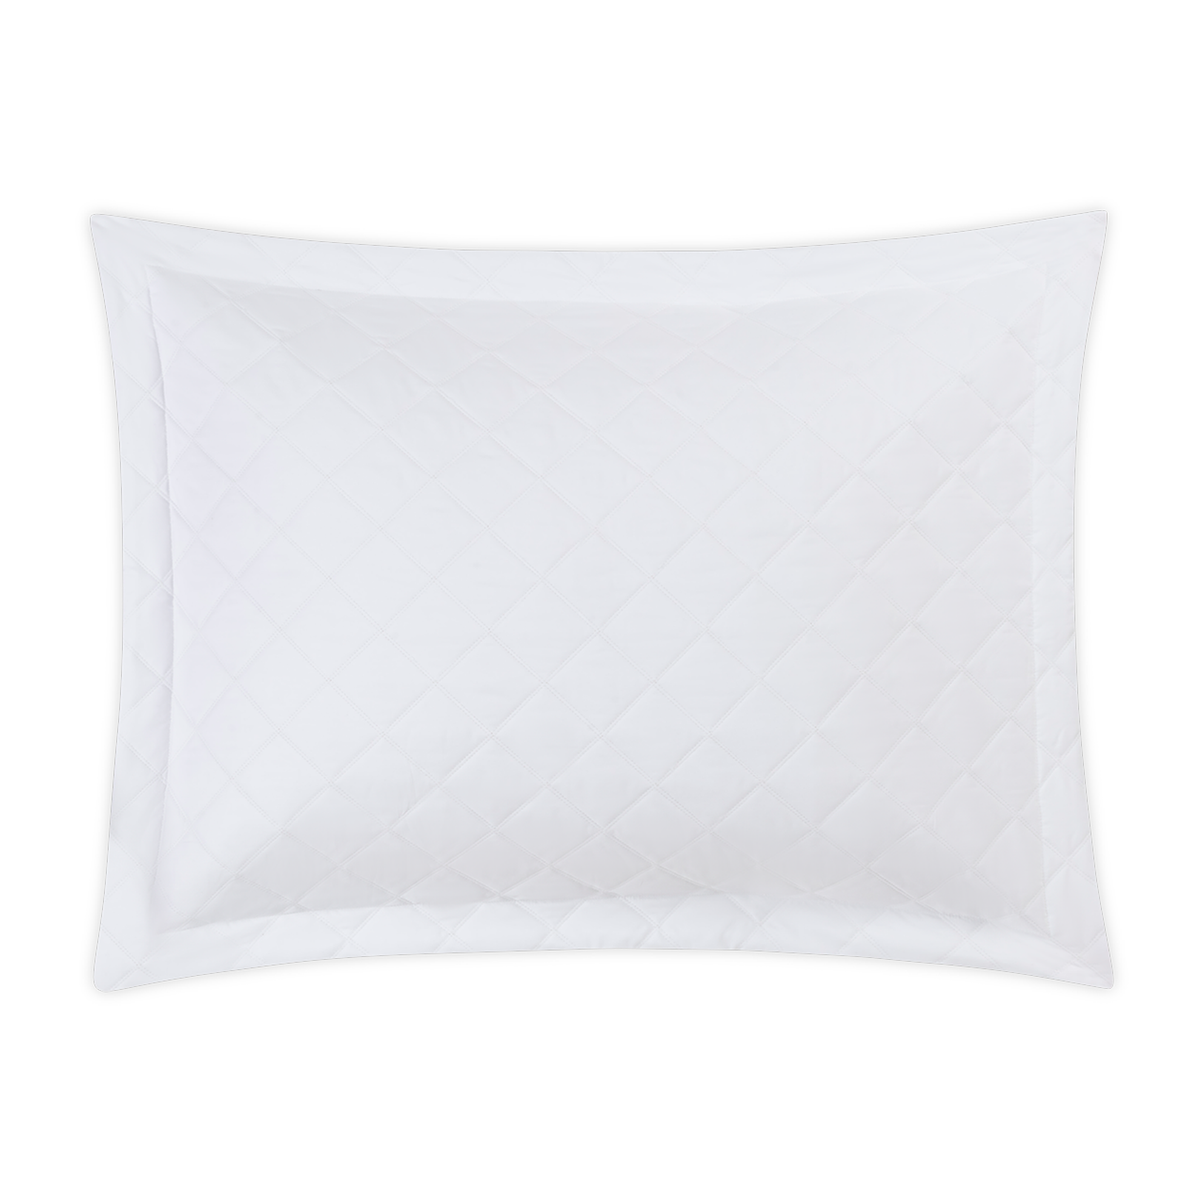 Sham of Matouk Milano Quilt Bedding in Color White